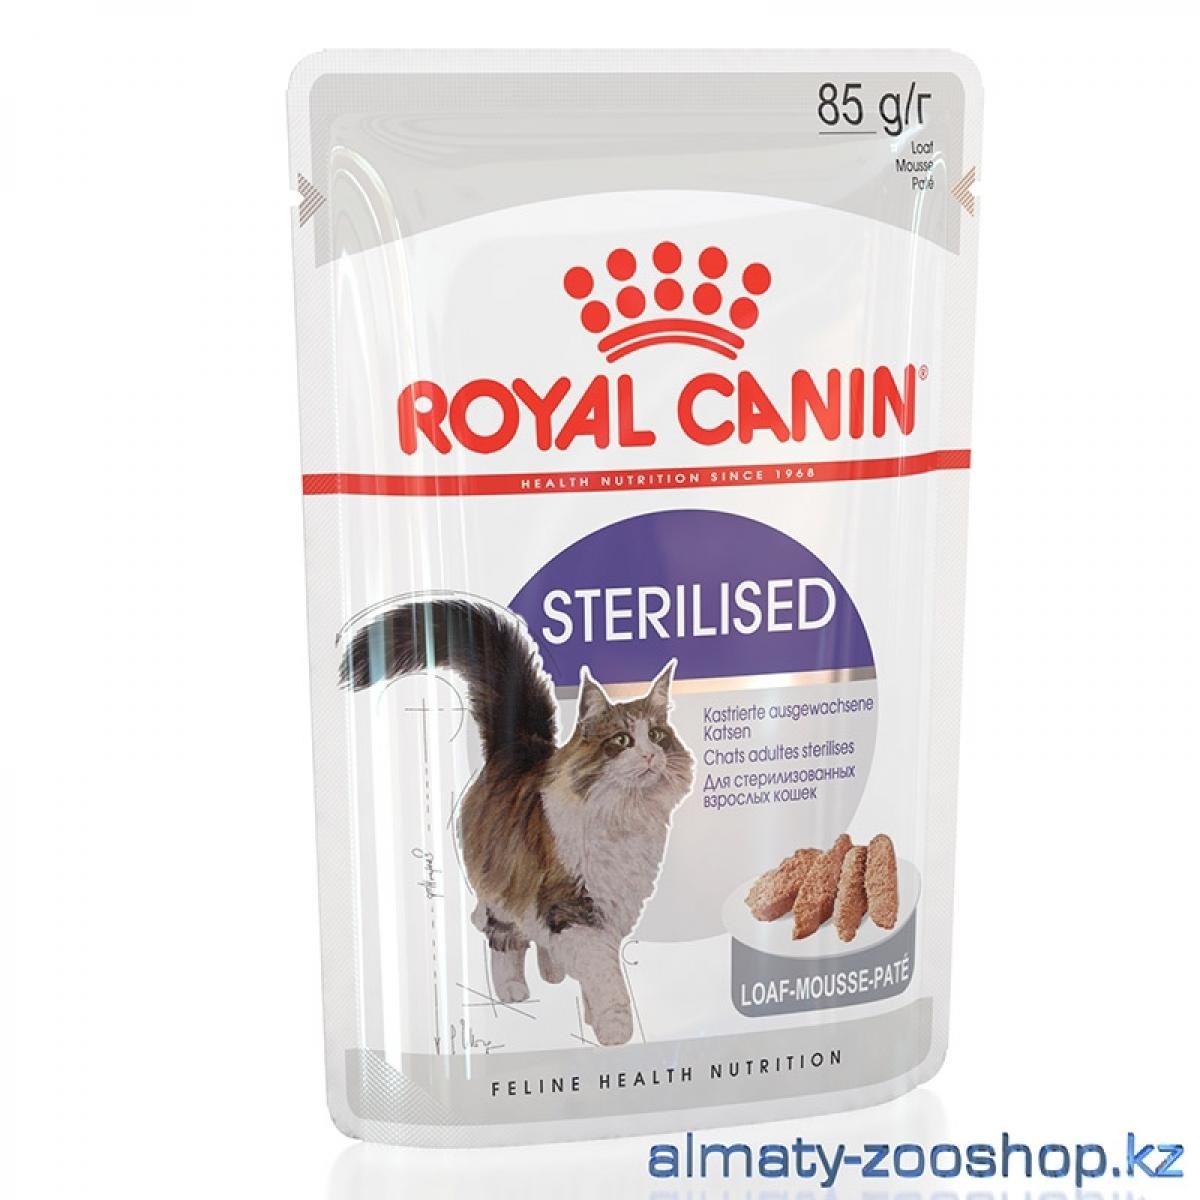 Royal canin sterilized